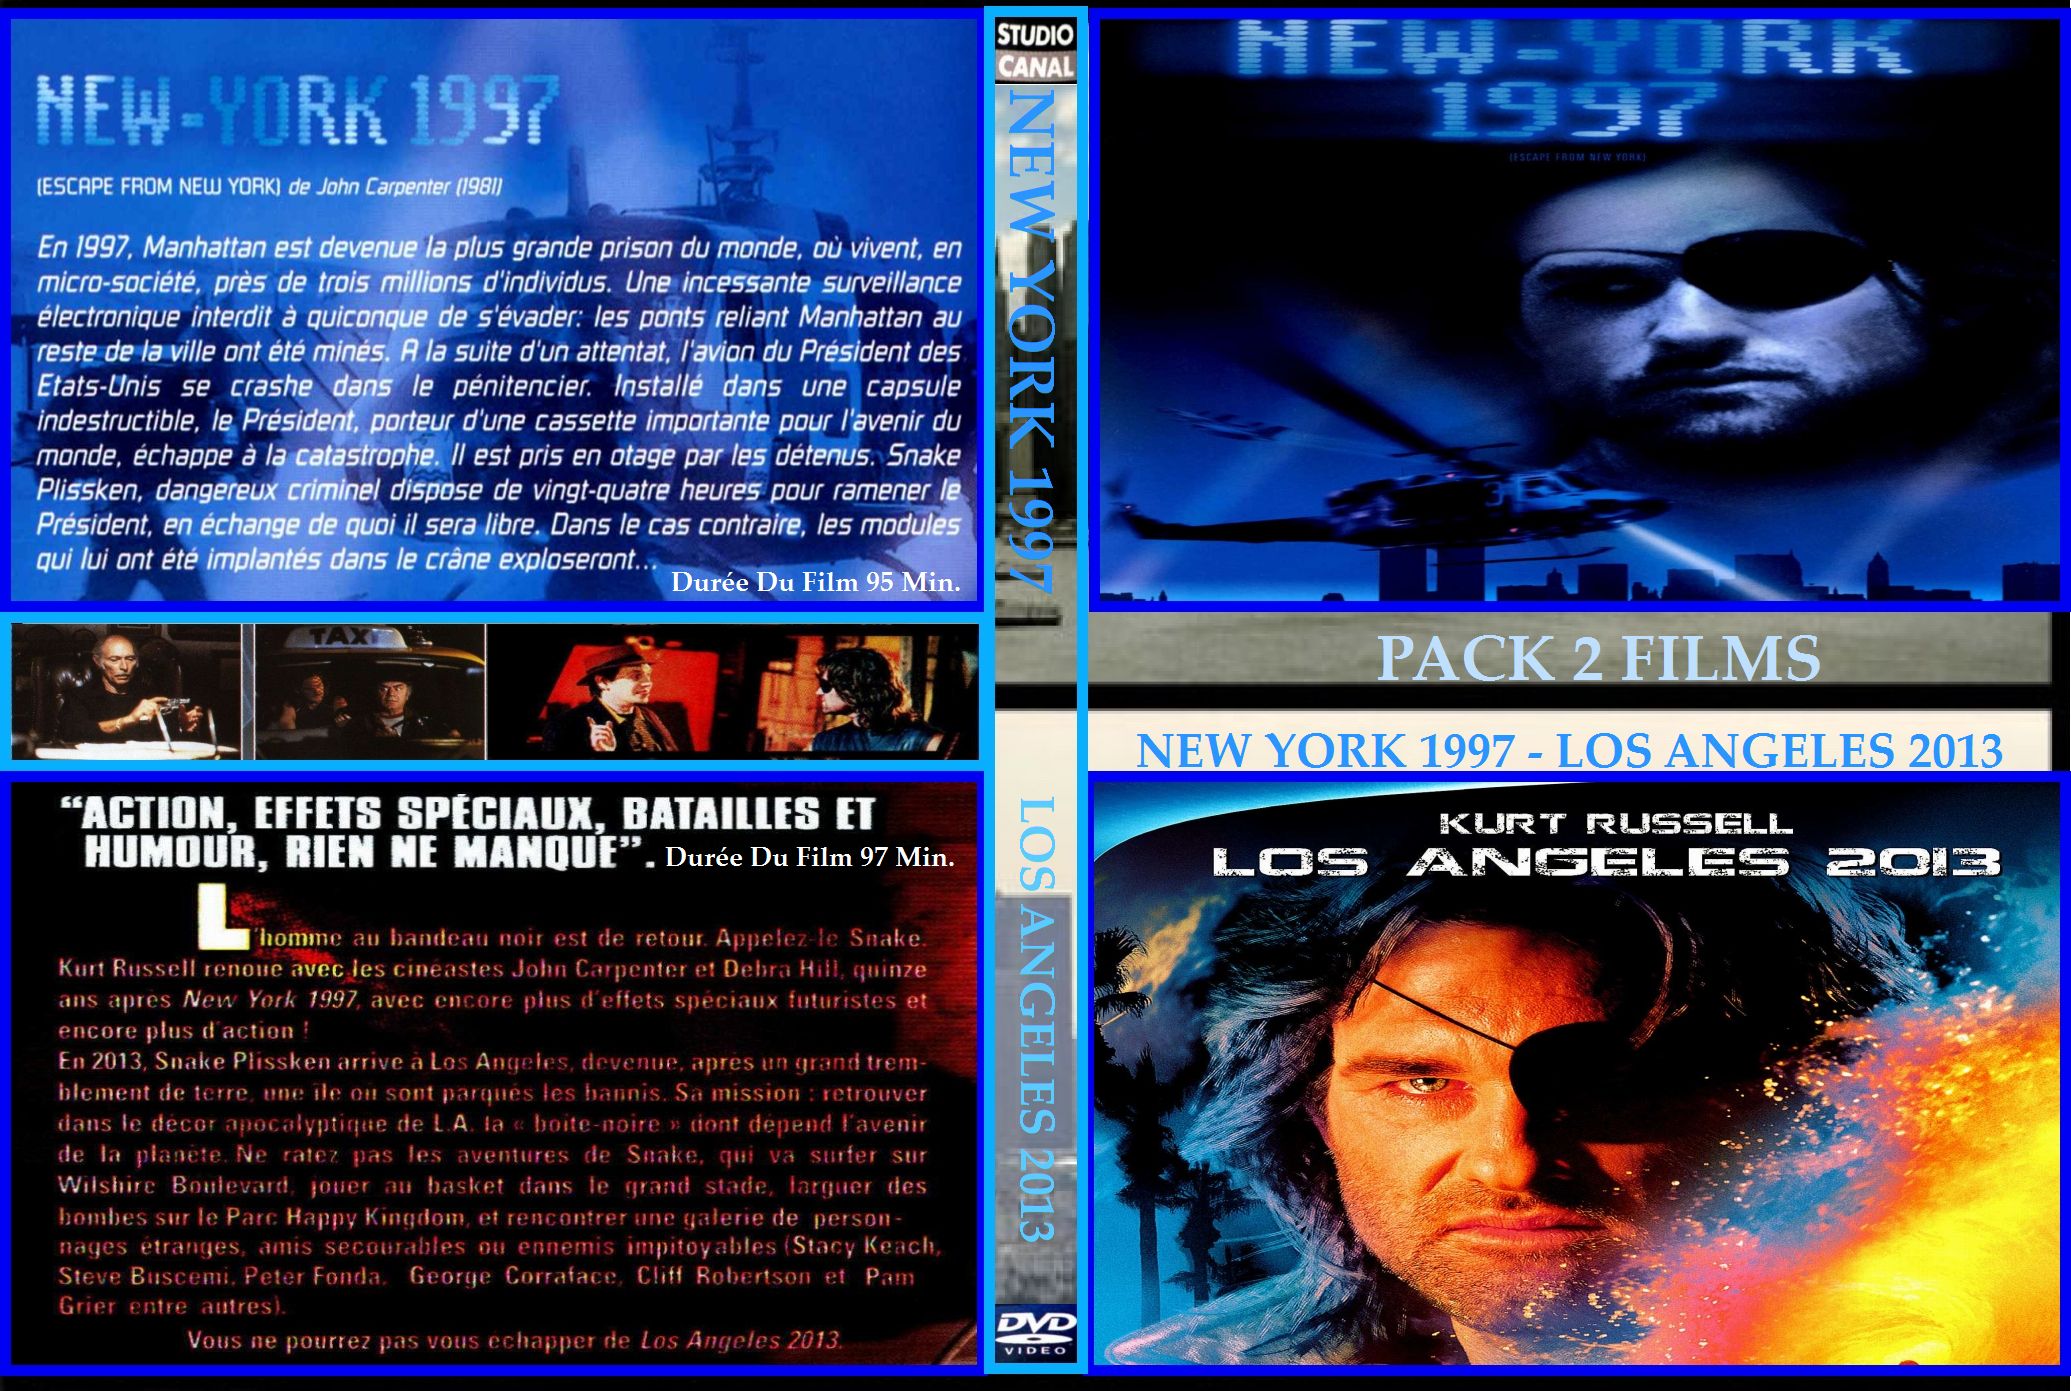 Jaquette DVD New York 1997 - Los Angeles 2013 Custom 